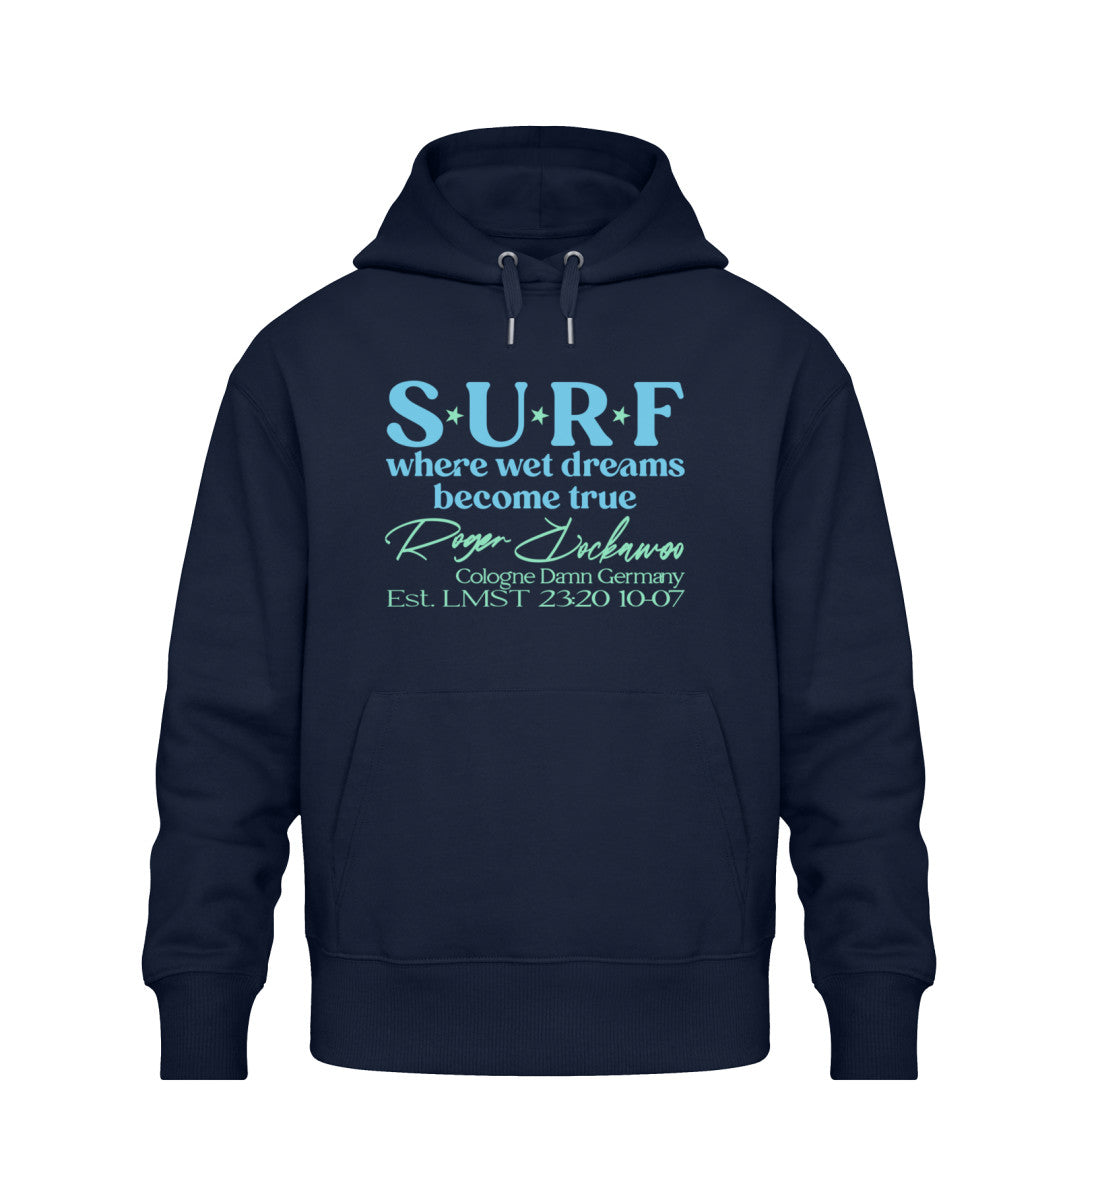 French Navy Blue Hoodie in Oversize Fit mit dem Design der Surf where wet dreams become true Kollektion von Roger Rockawoo Clothing